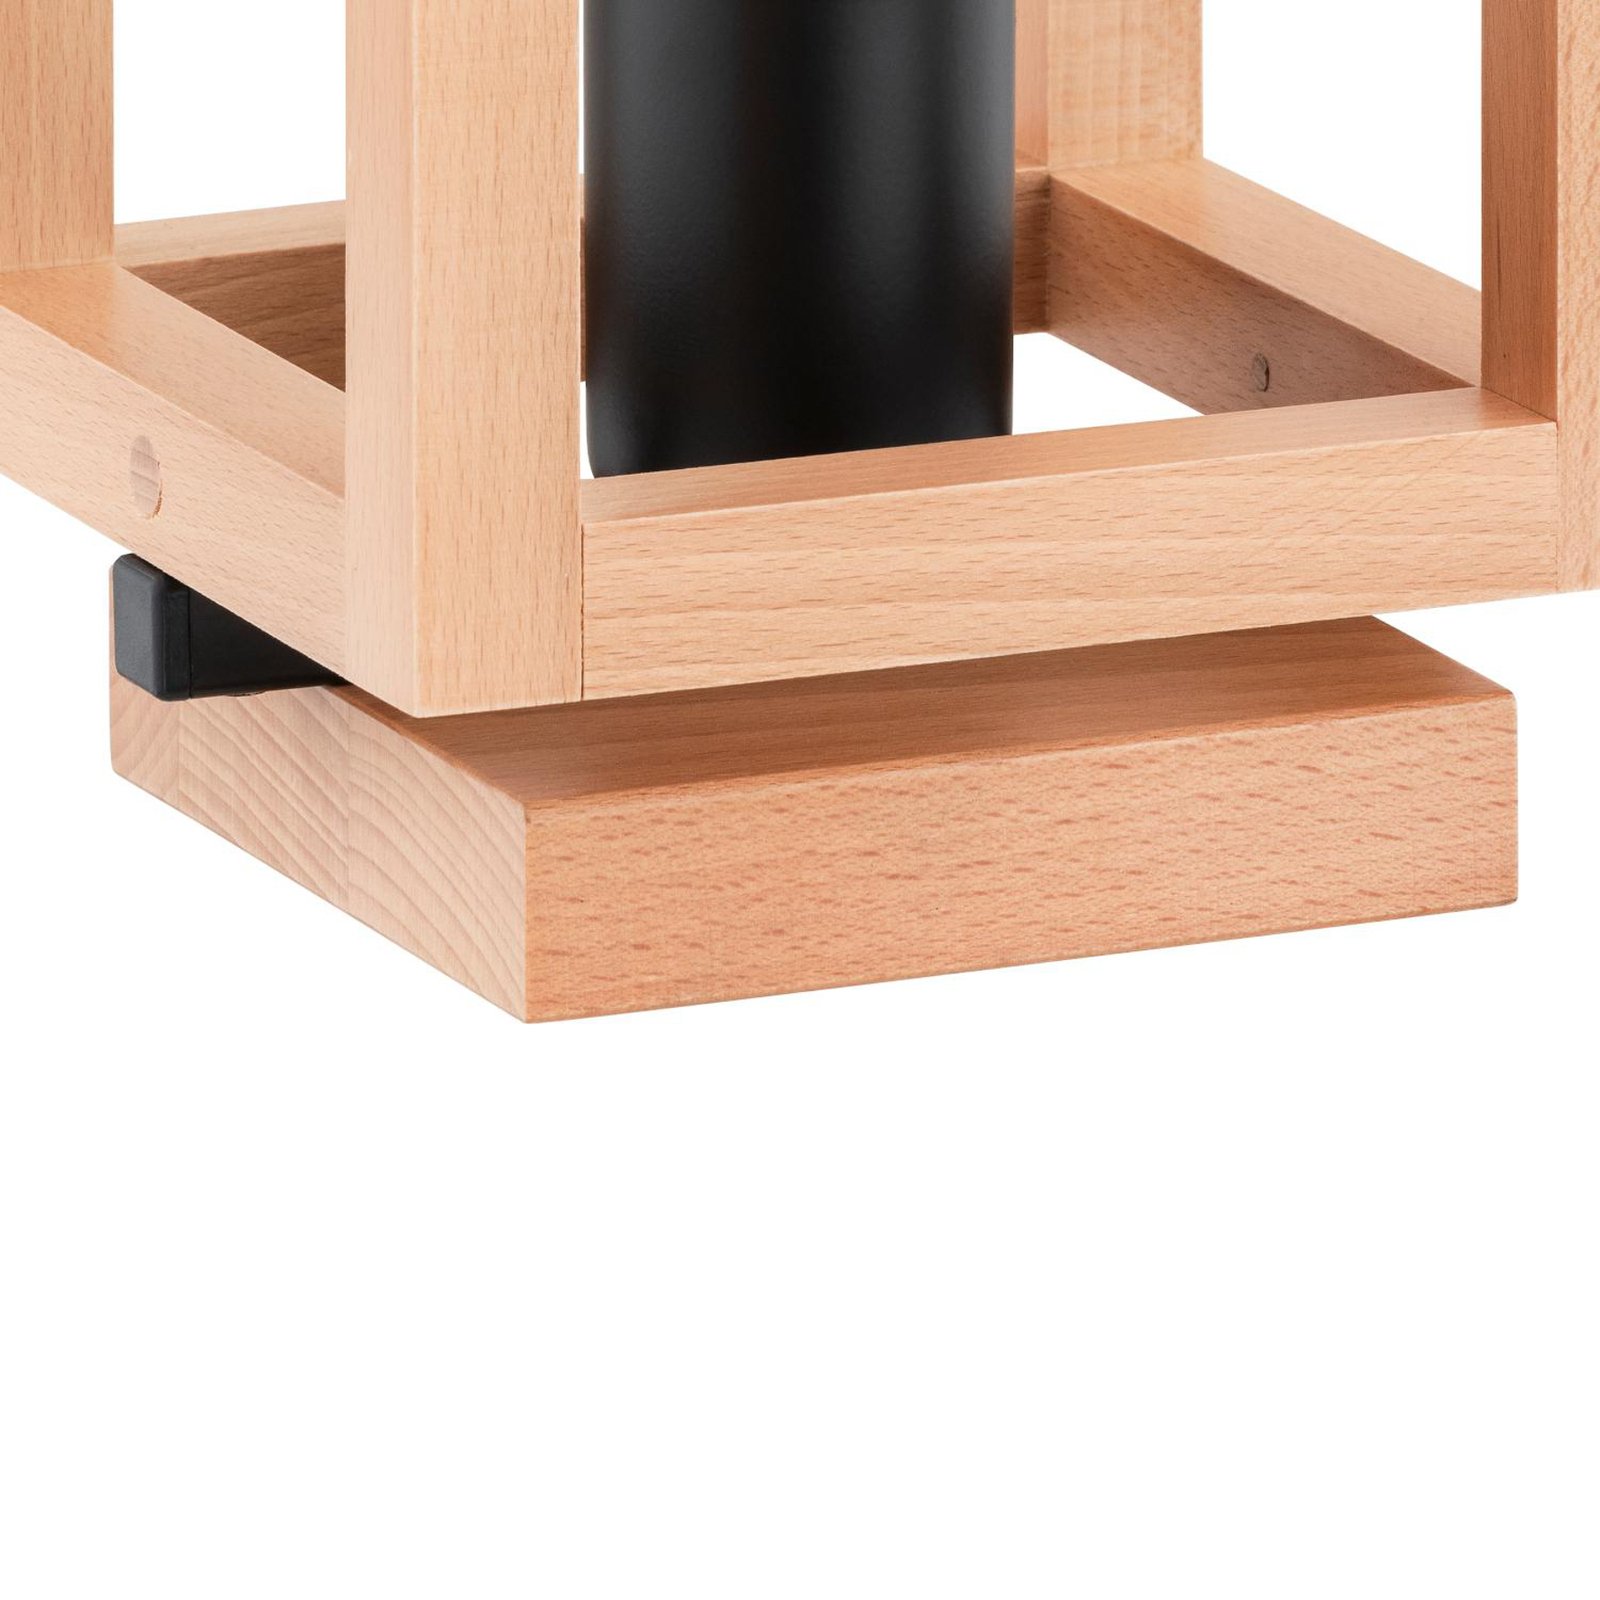 Pako tafellamp, kooivorm, kubus, hout, 16 x 16 x 25 cm